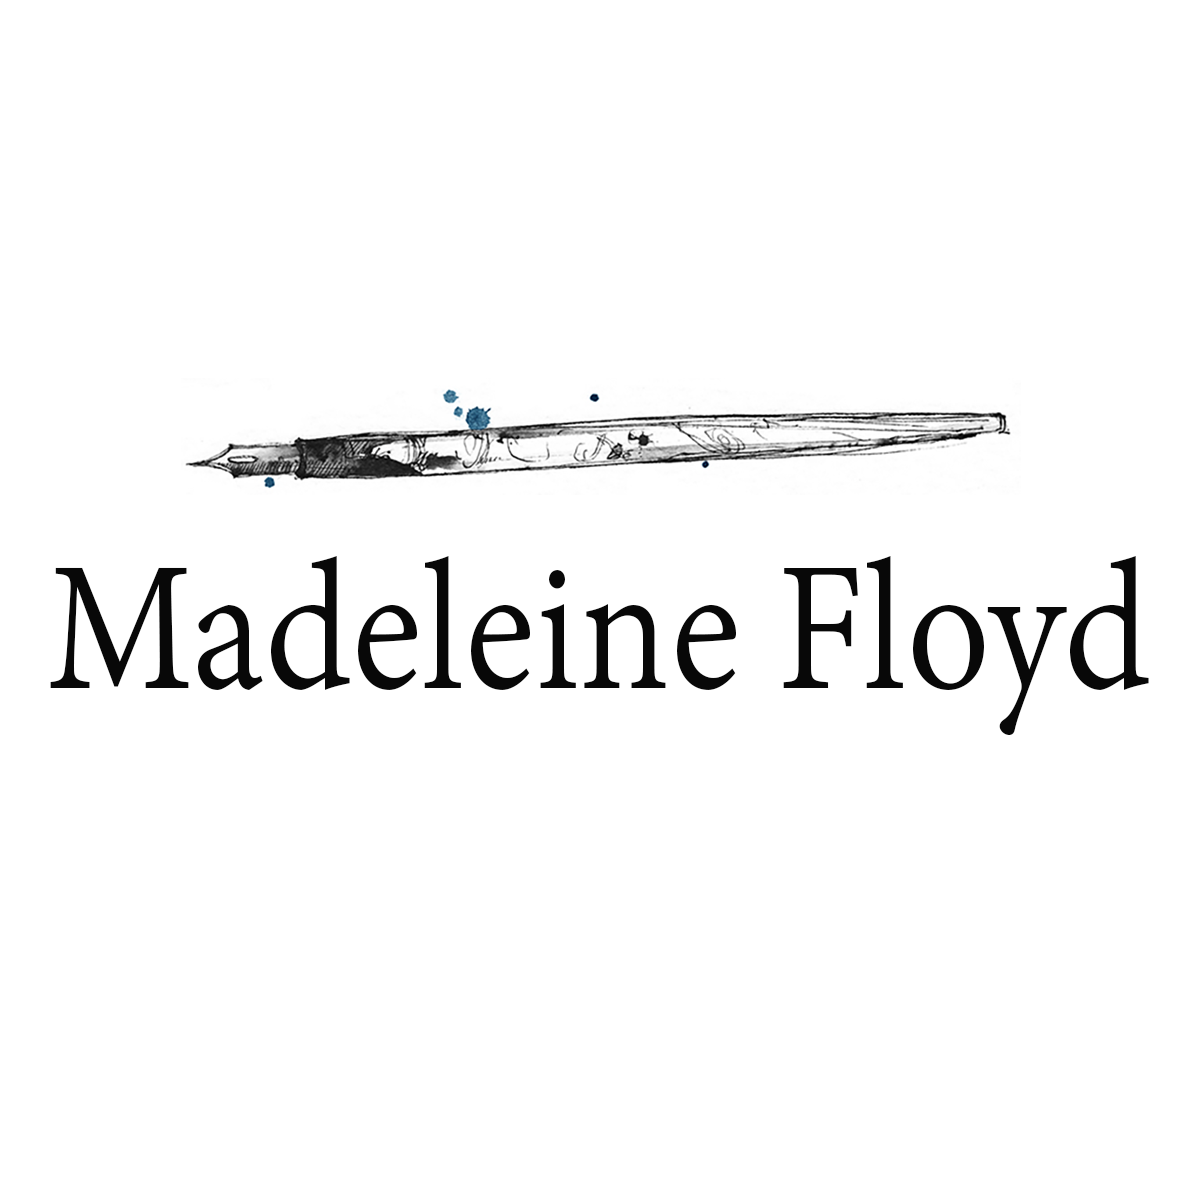 madeleine-floyd-logo-square